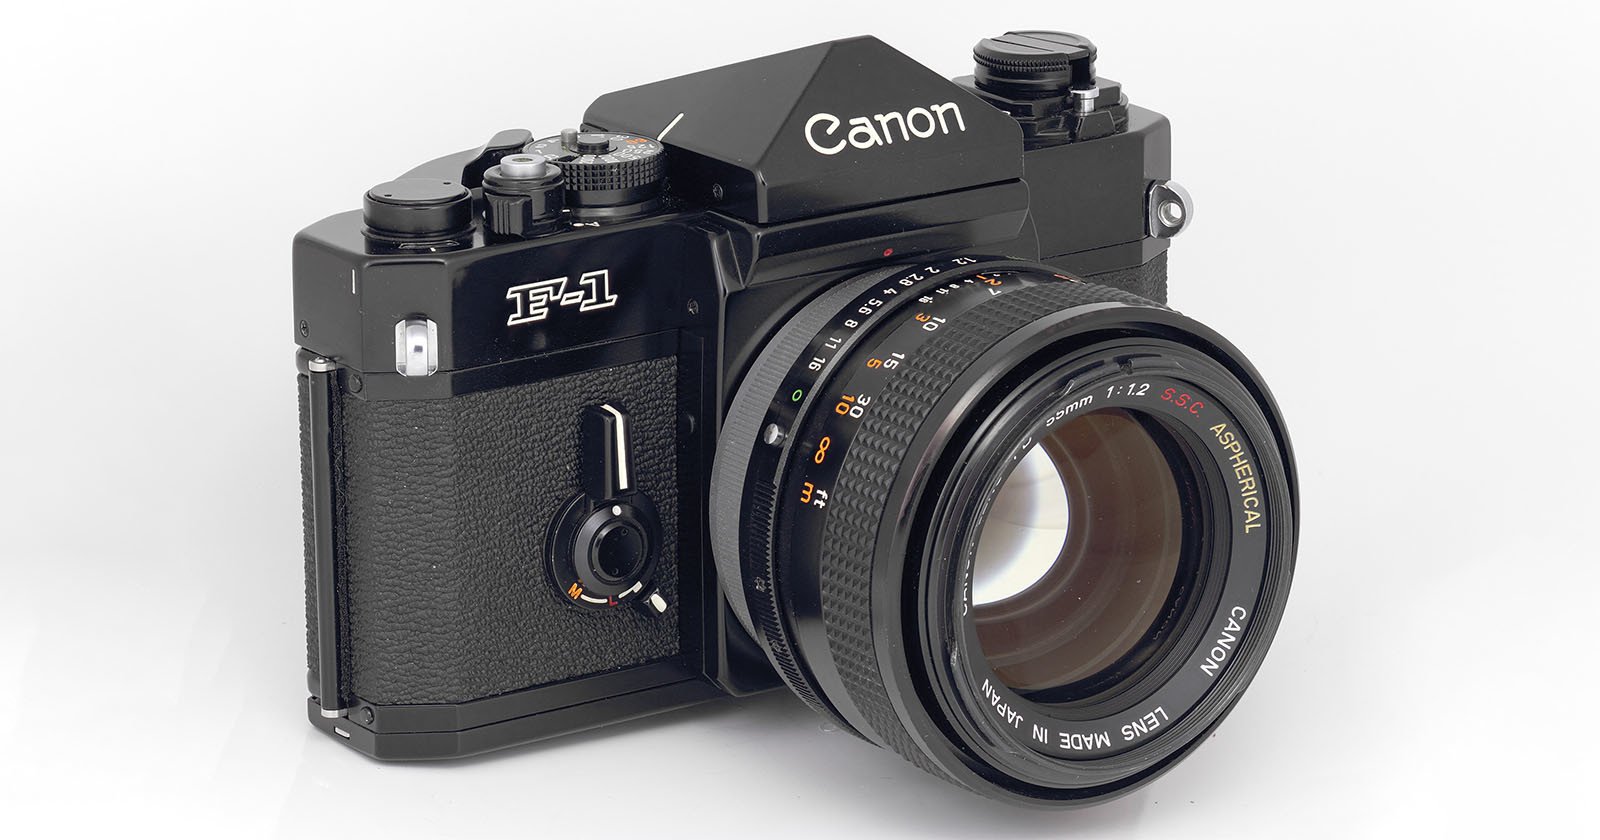  cheapest pro camera canon has ever released 